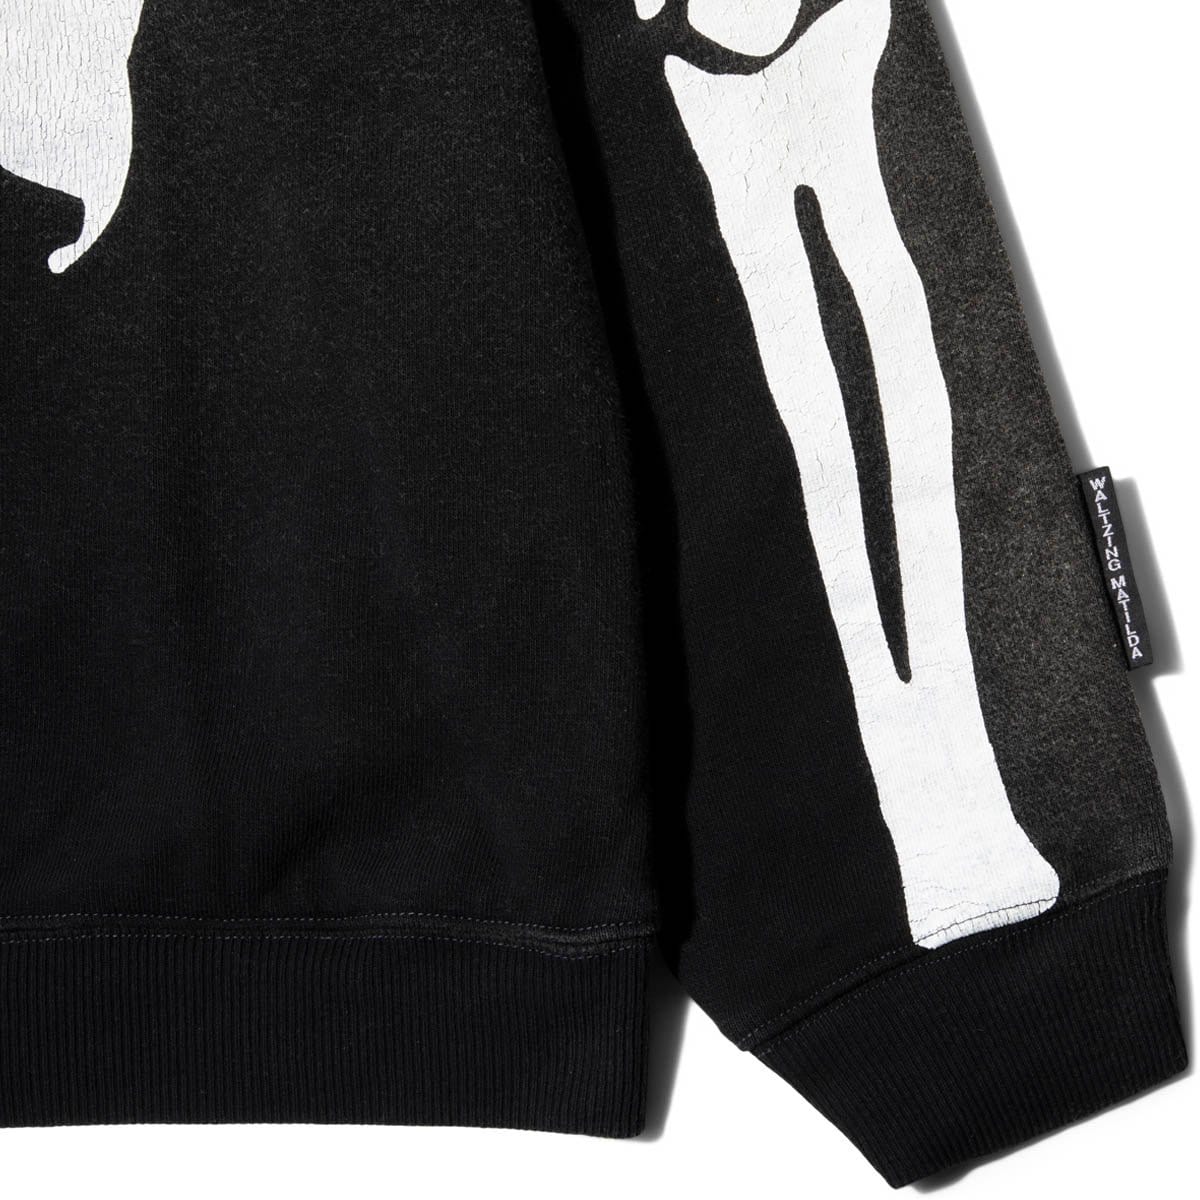 Kapital Hoodies & Sweatshirts BLACK / 3 FLEECY KNIT BIVOUAC BIG SWT